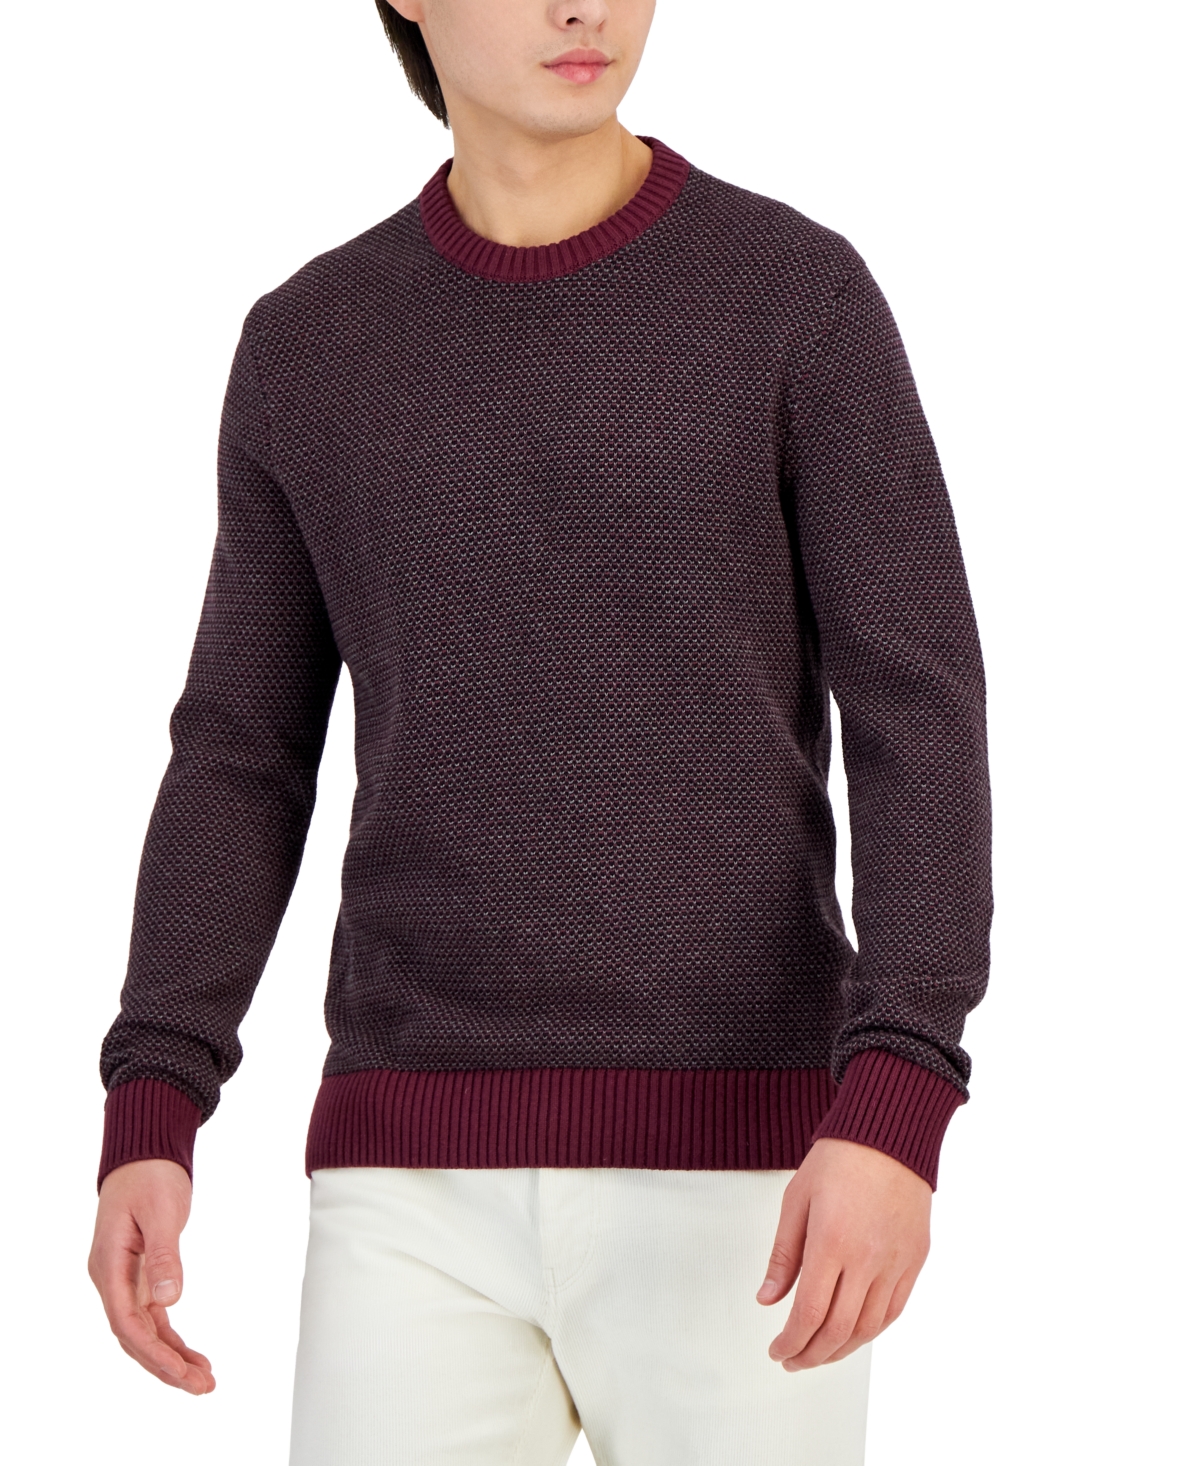 Men's Slim Fit Long-Sleeve Novelty Stitch Crewneck Sweater - Cordovan